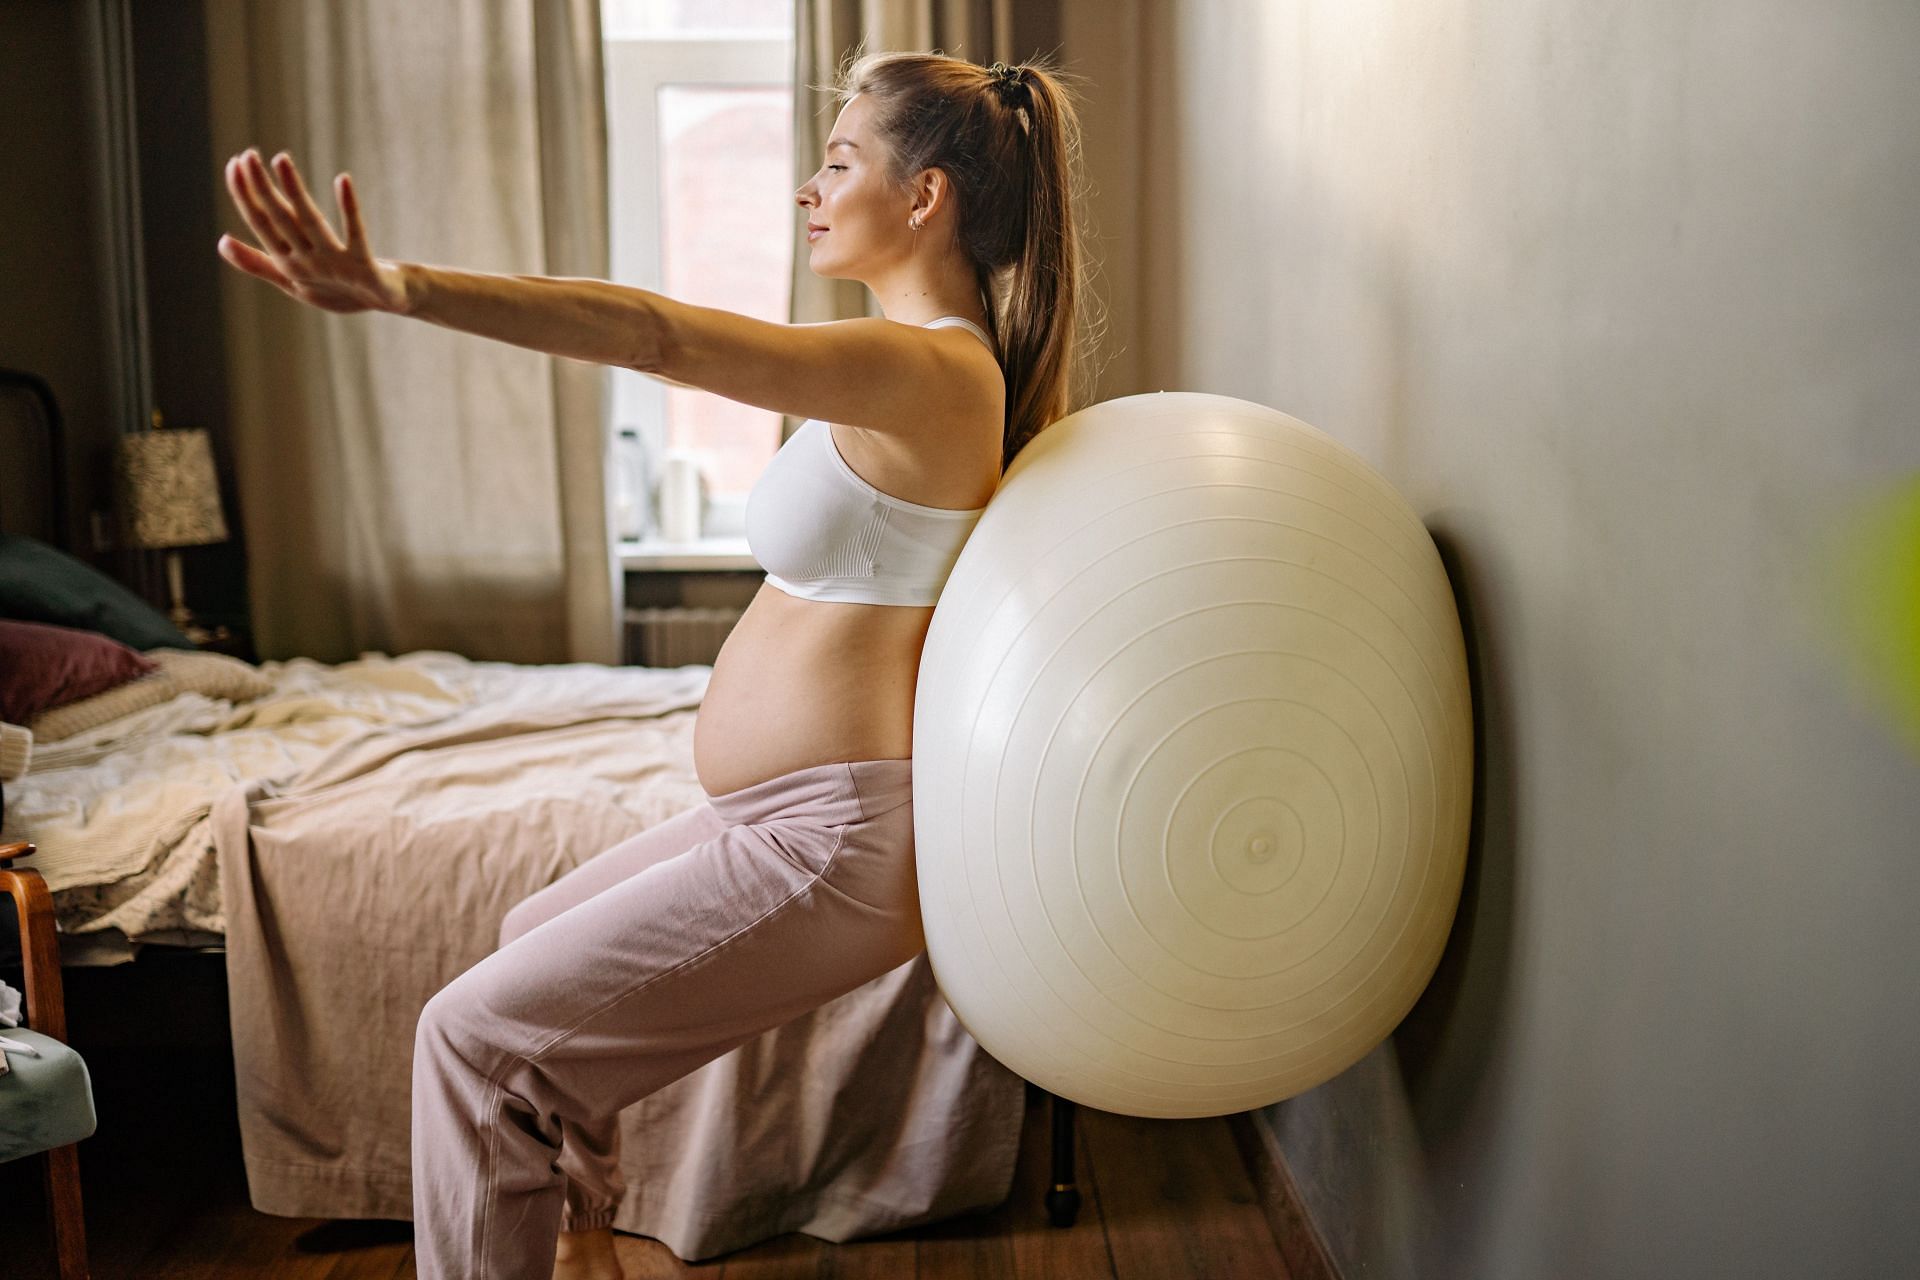 These exercises can make your pregnancy comfortable. (Image via Pexels/ Yan Krakau)